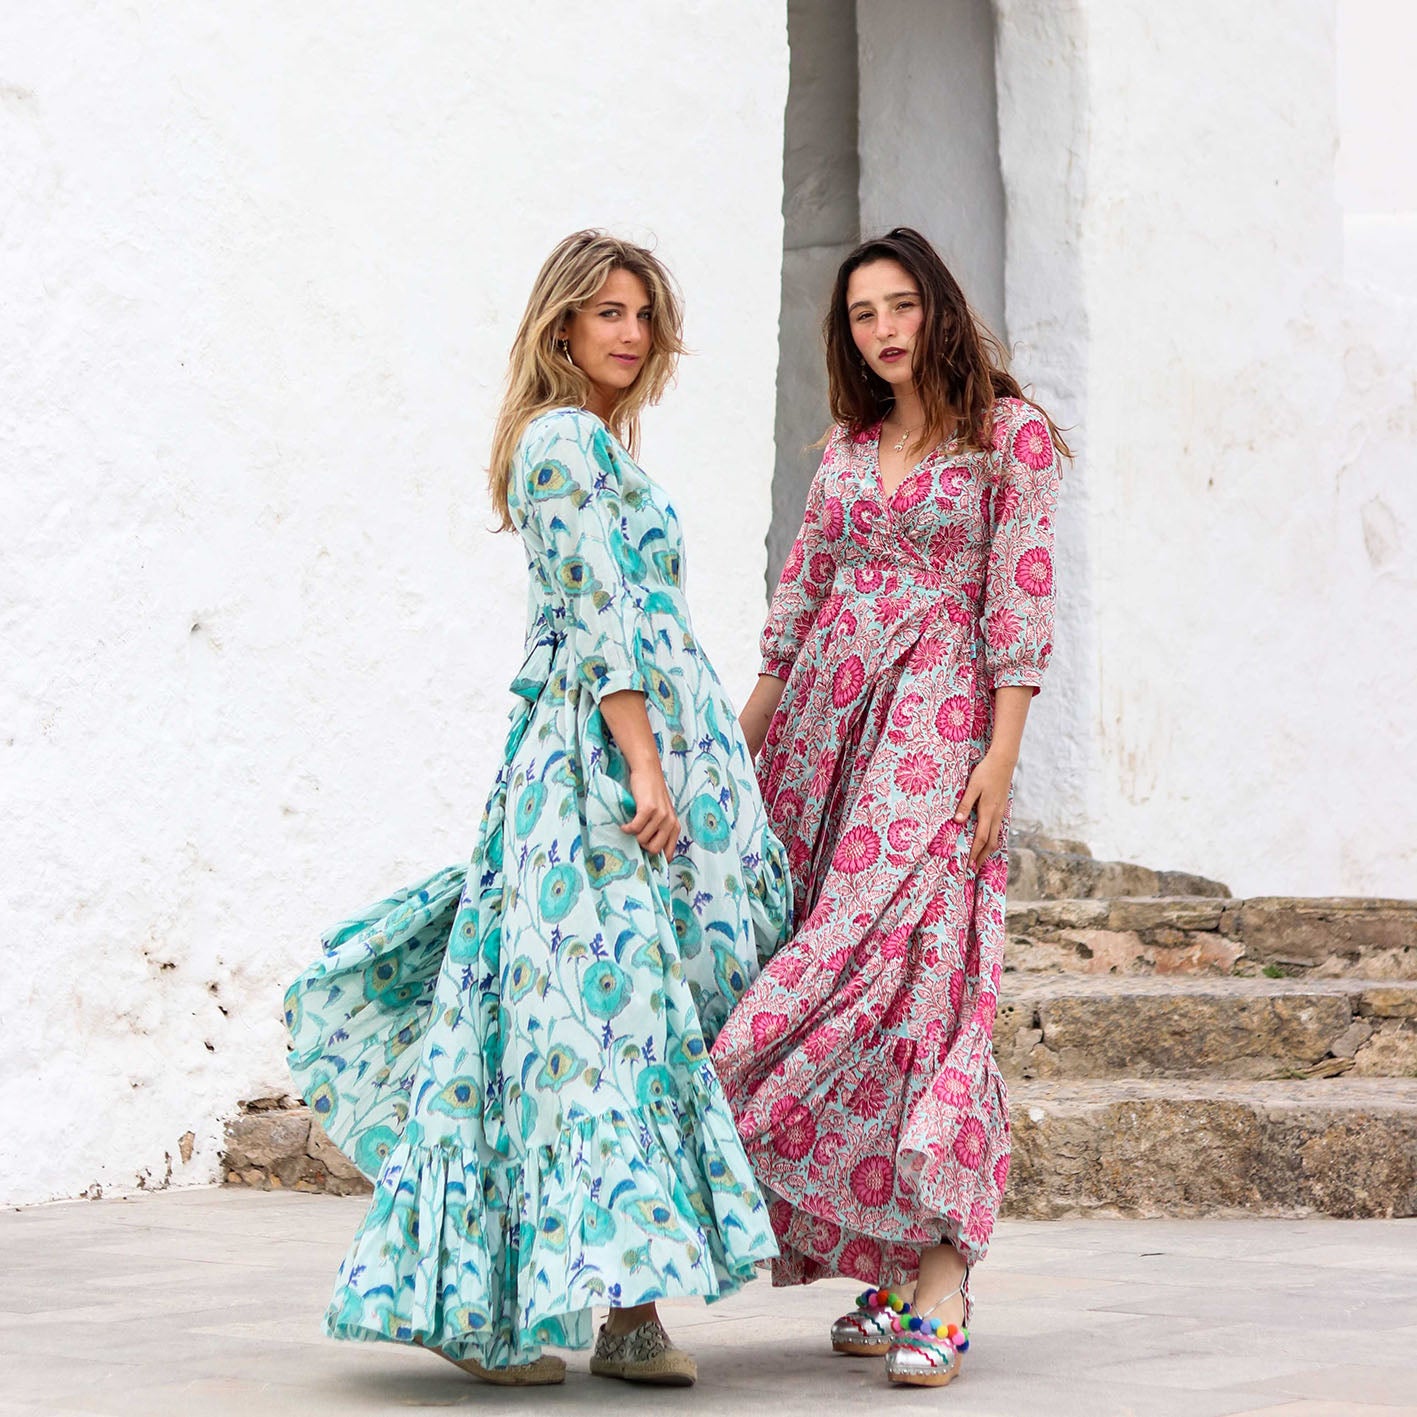 Aurobelle is a lifestyle bohemian fashion brand from Ibiza